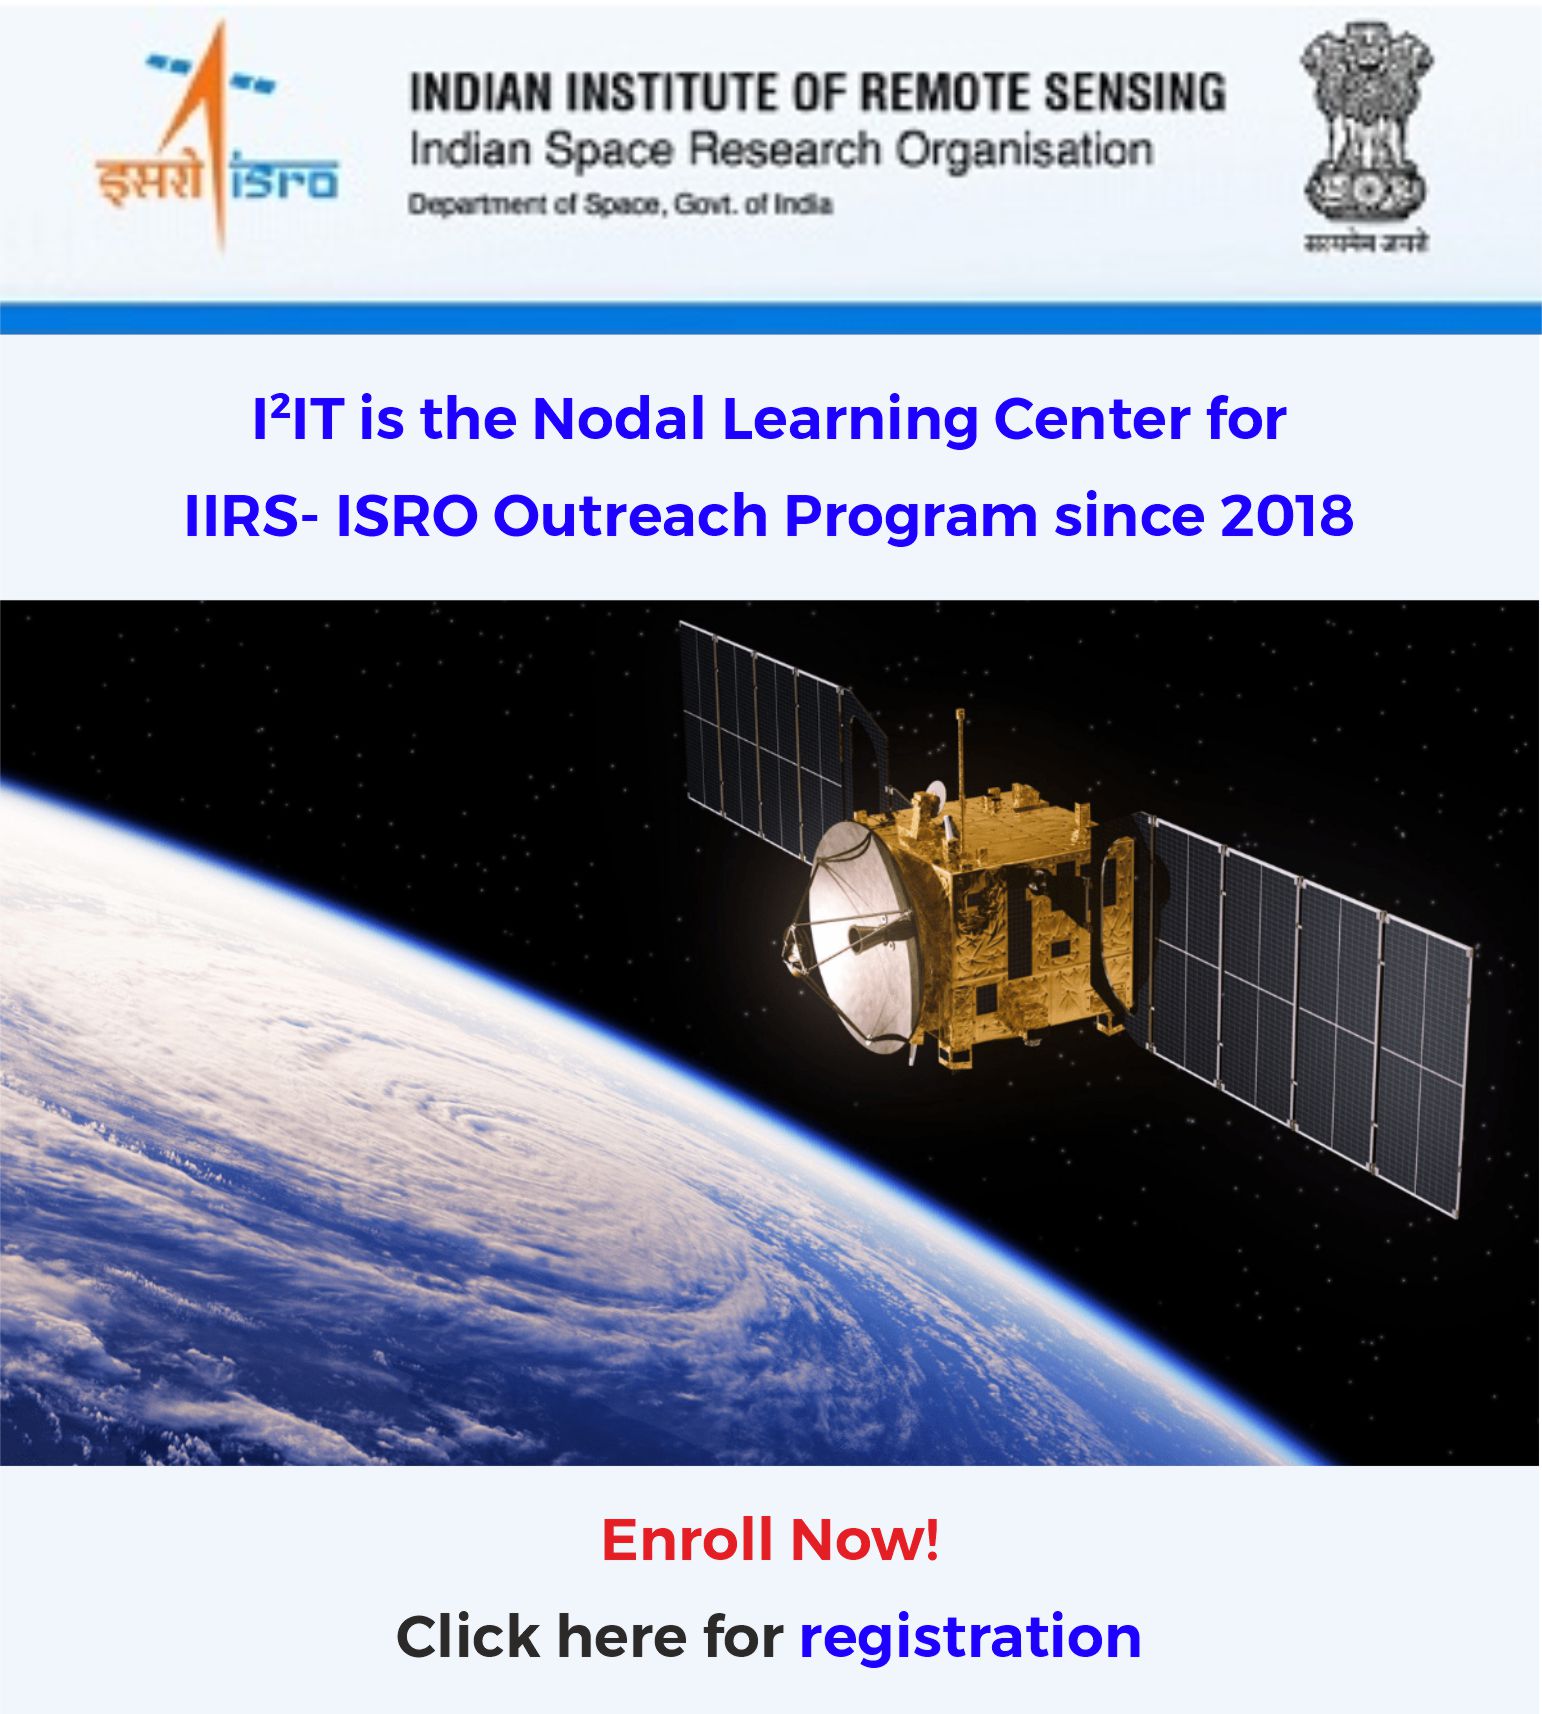 IIRS-ISRO Outreach Program